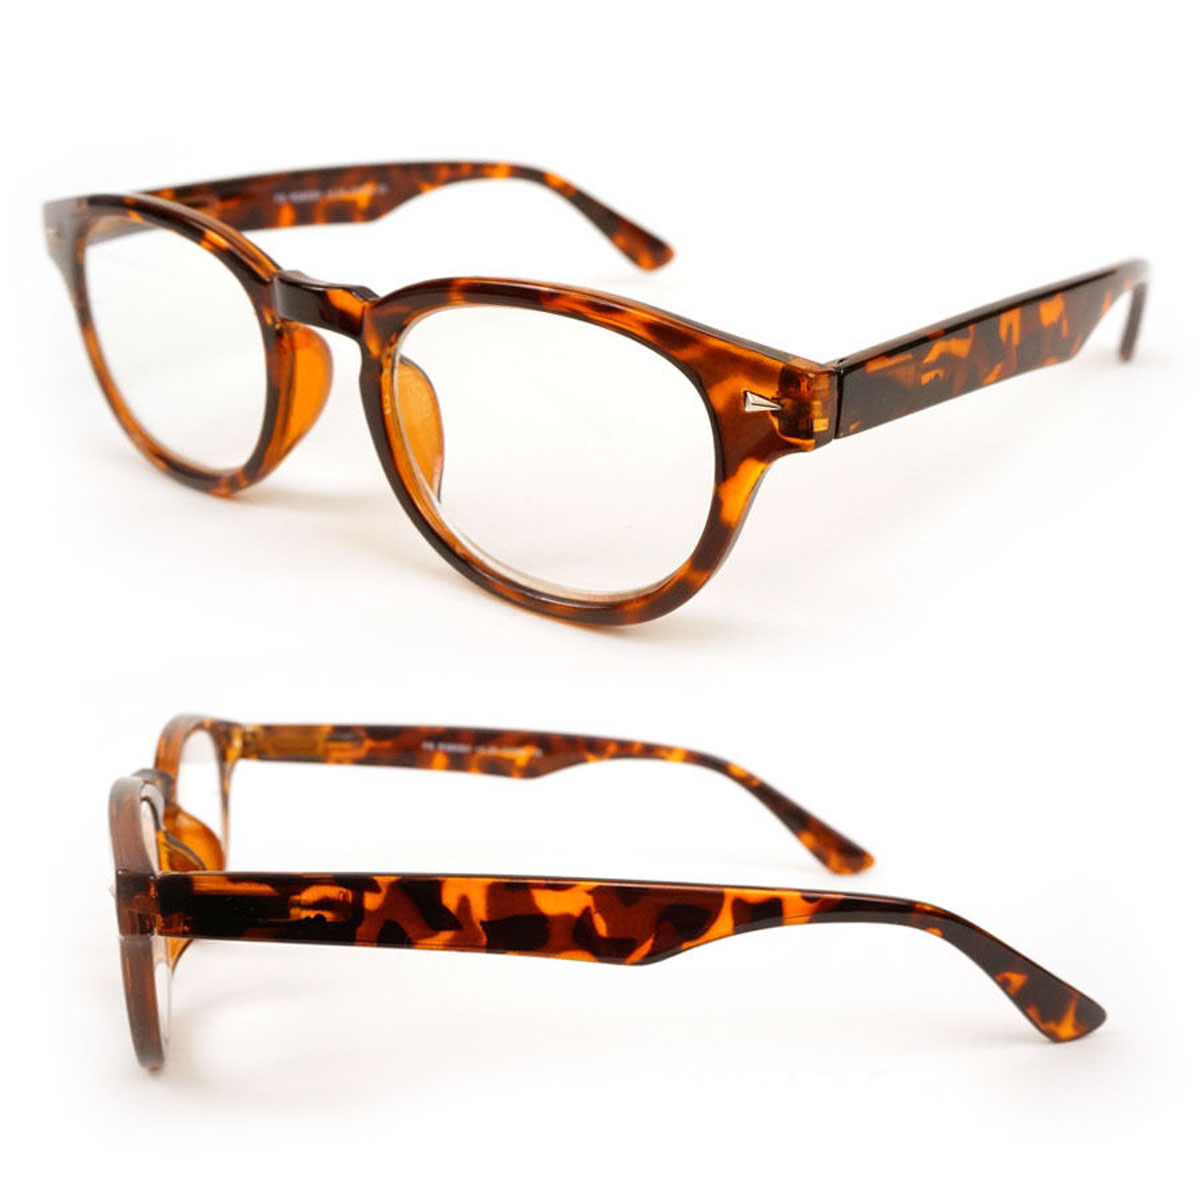 Medium Round Classic Frame Reading Glasses Geek Retro Vintage Style 100-375 - Brown, +1.00